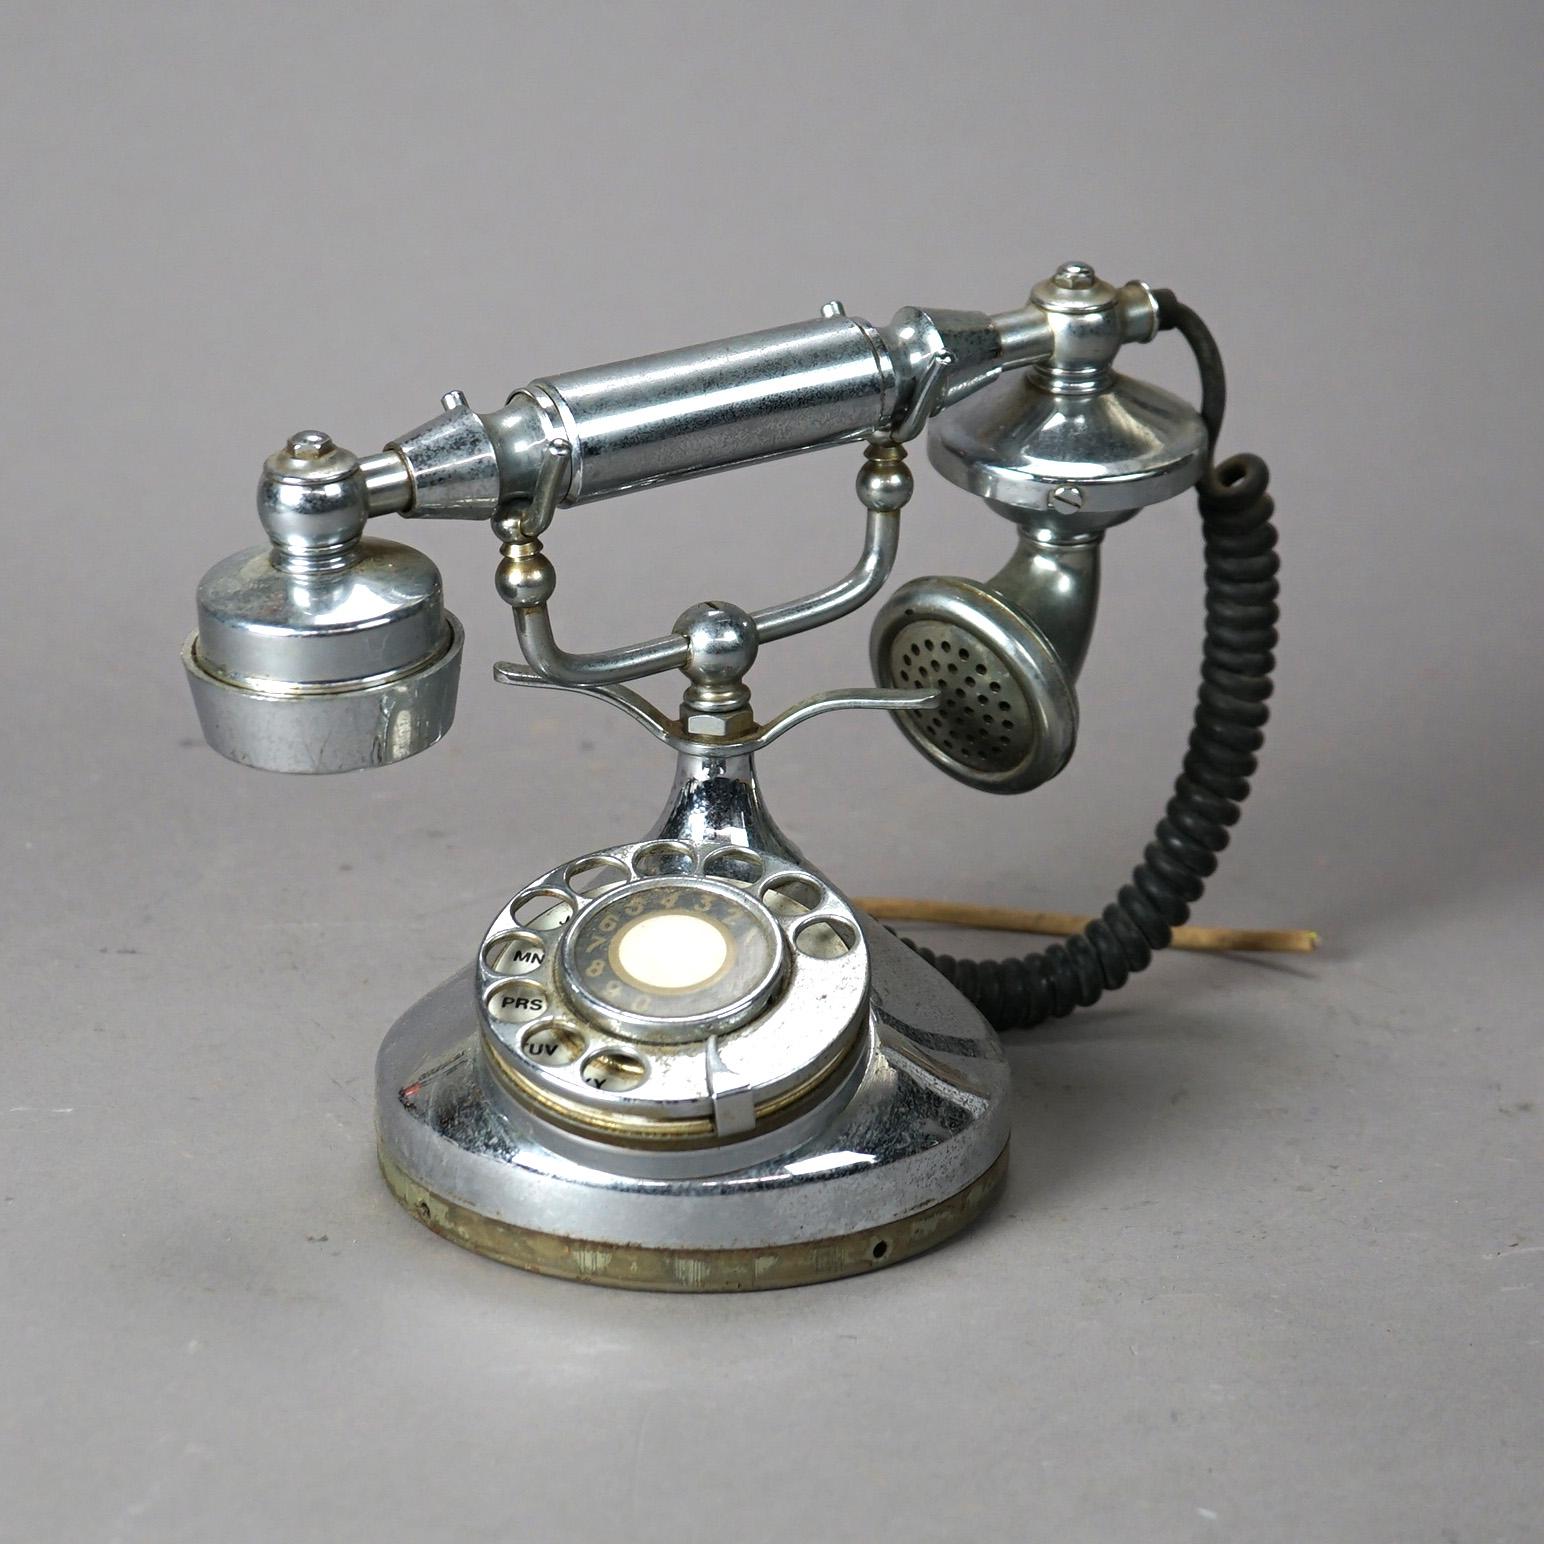 An antique Art Deco rotary telephone circa 1930

Measures - 7.5